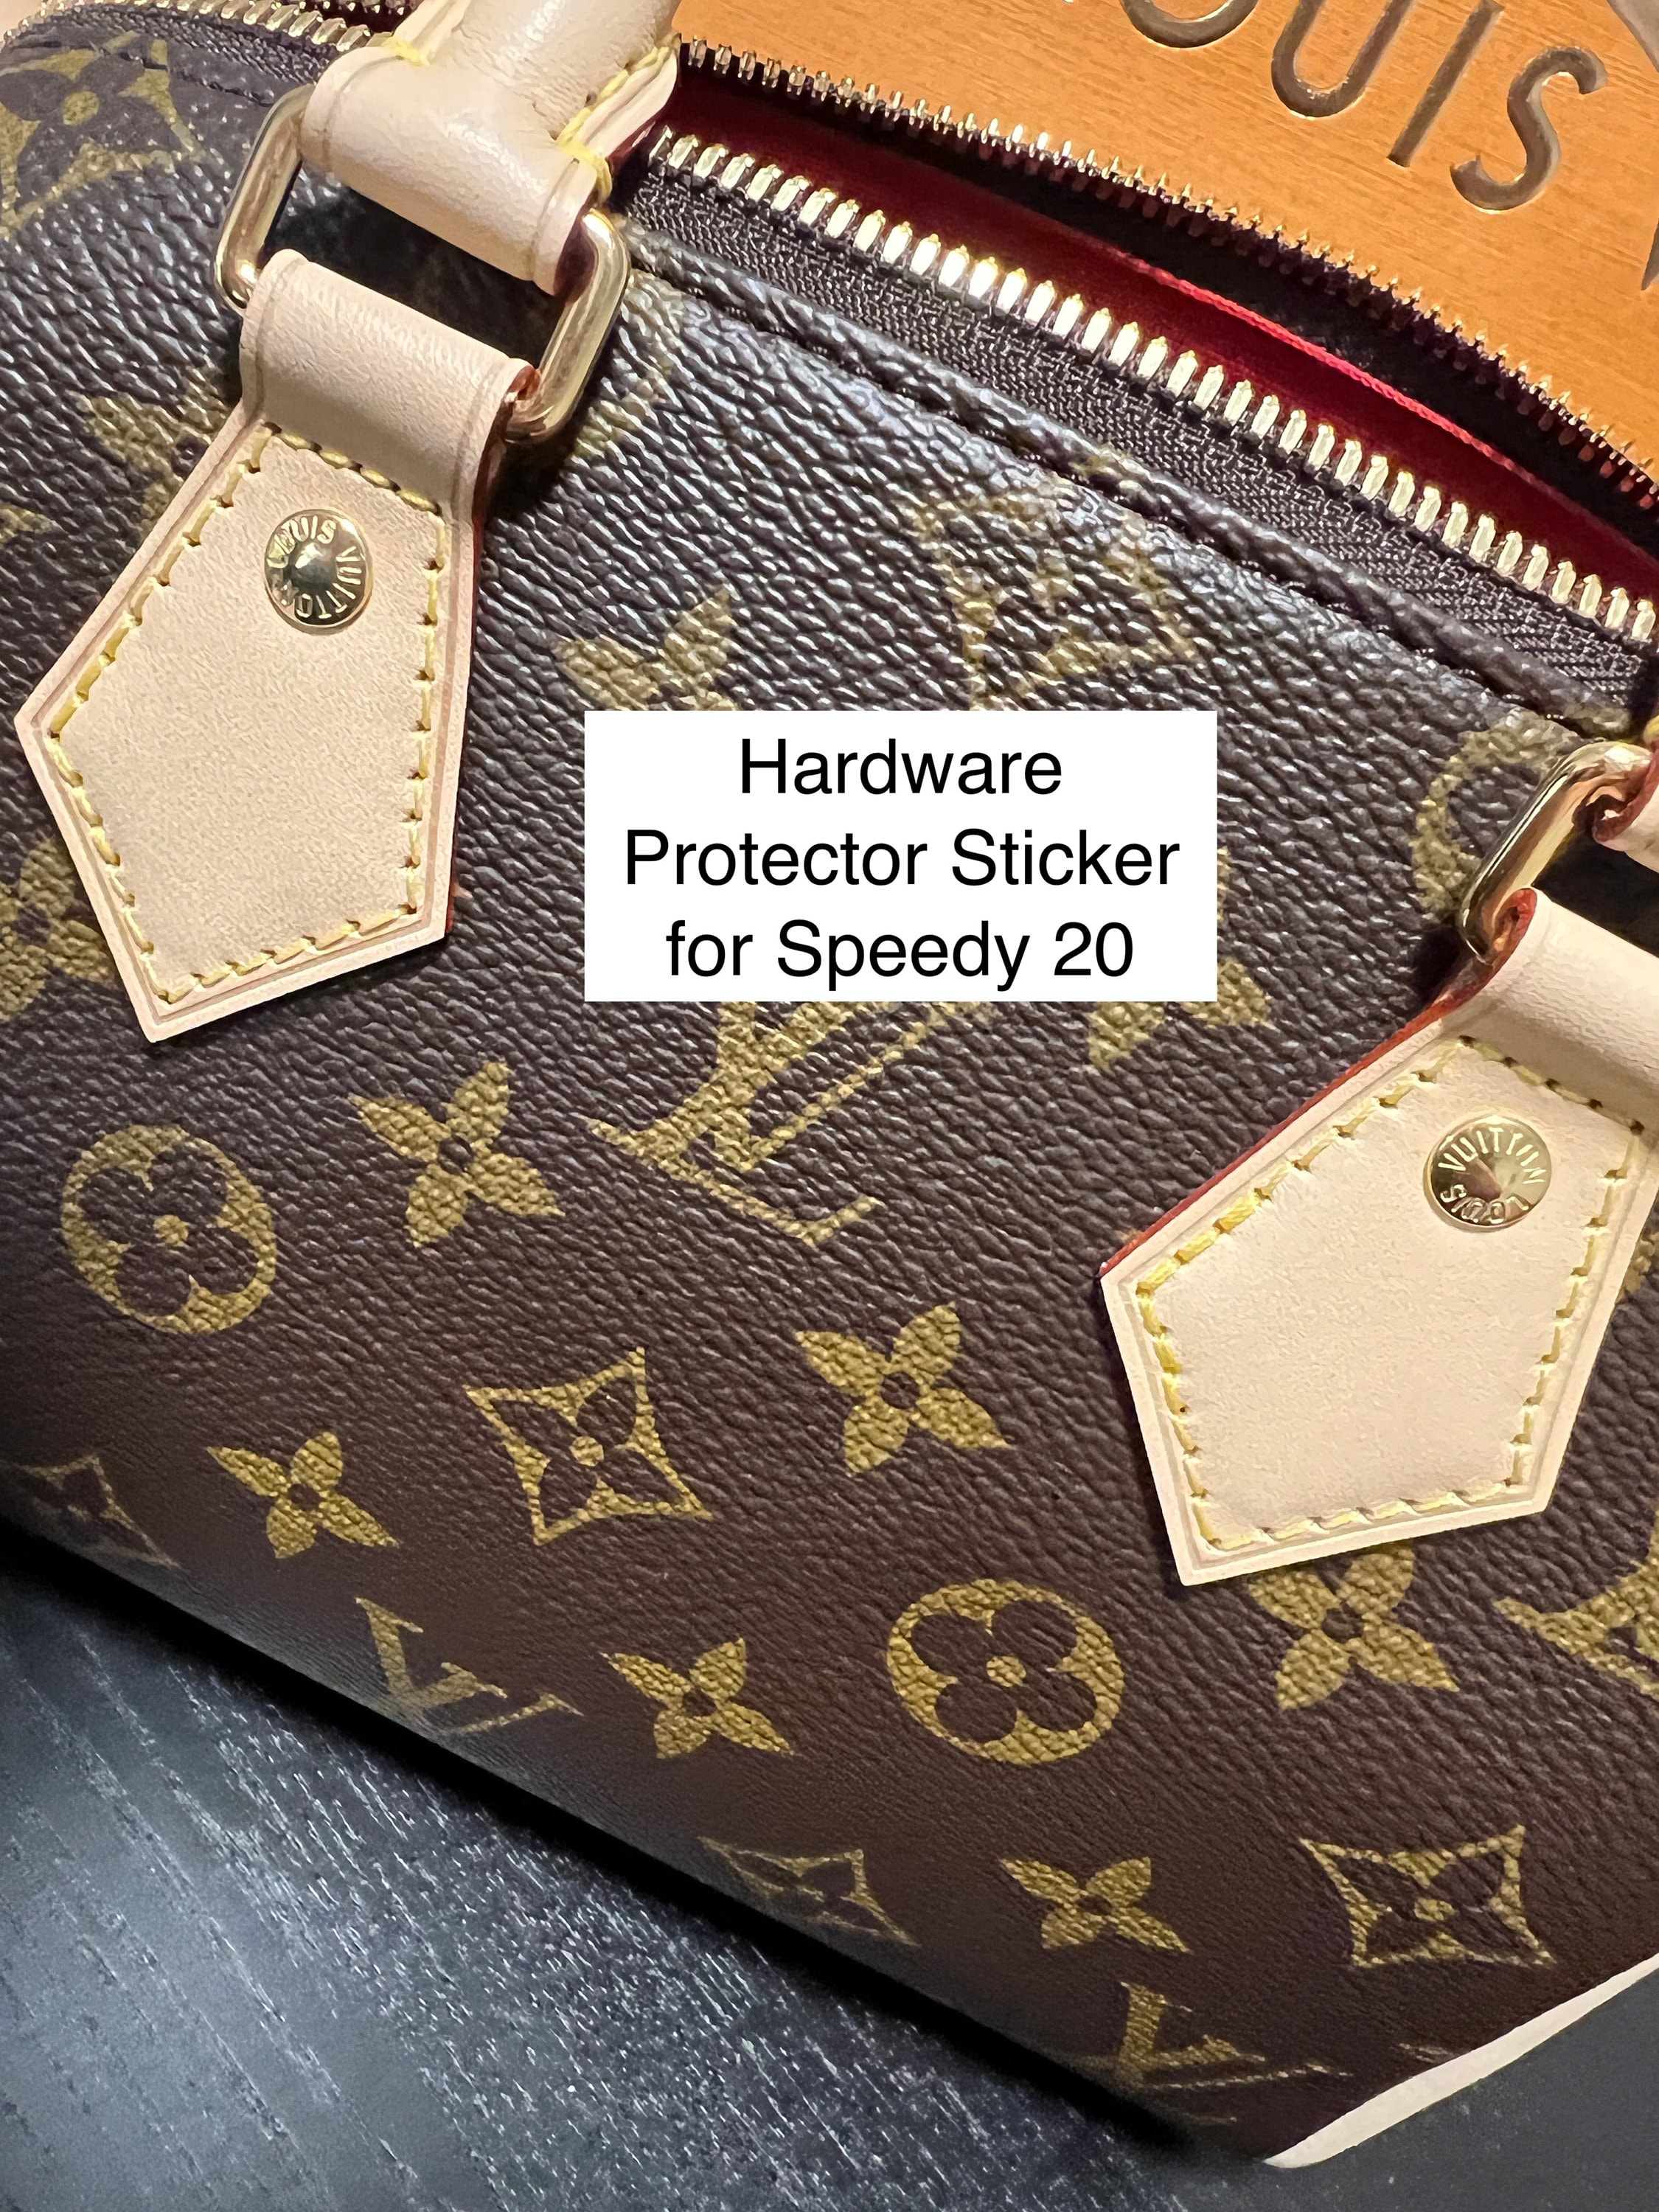 Hardware Protector Sticker for Speedy 20 